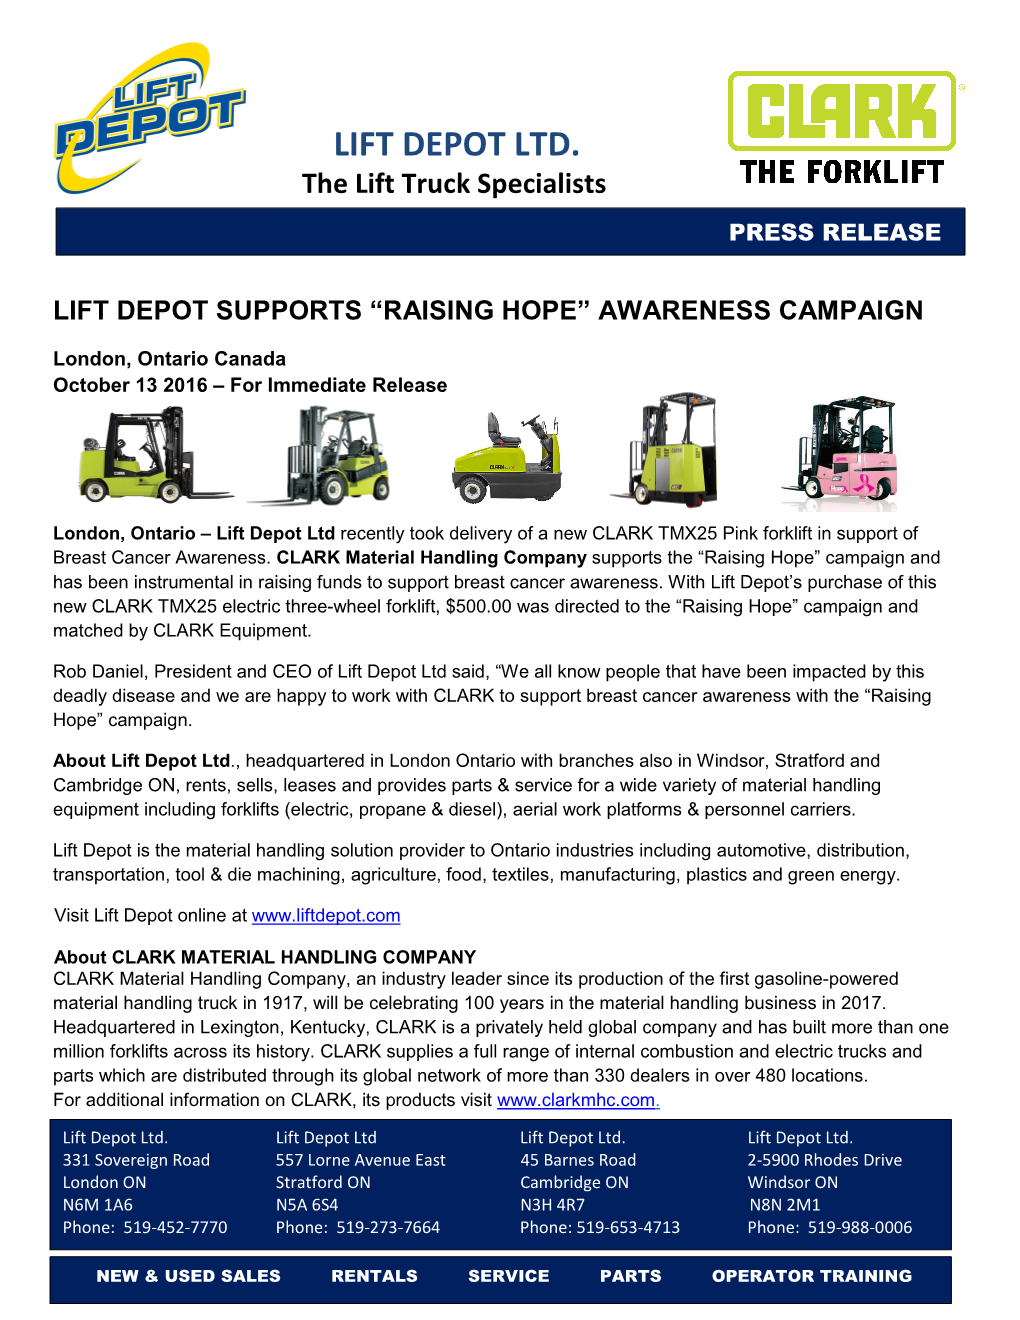 Lift Depot & CLARK Equipment Support Raising Hope Campaign